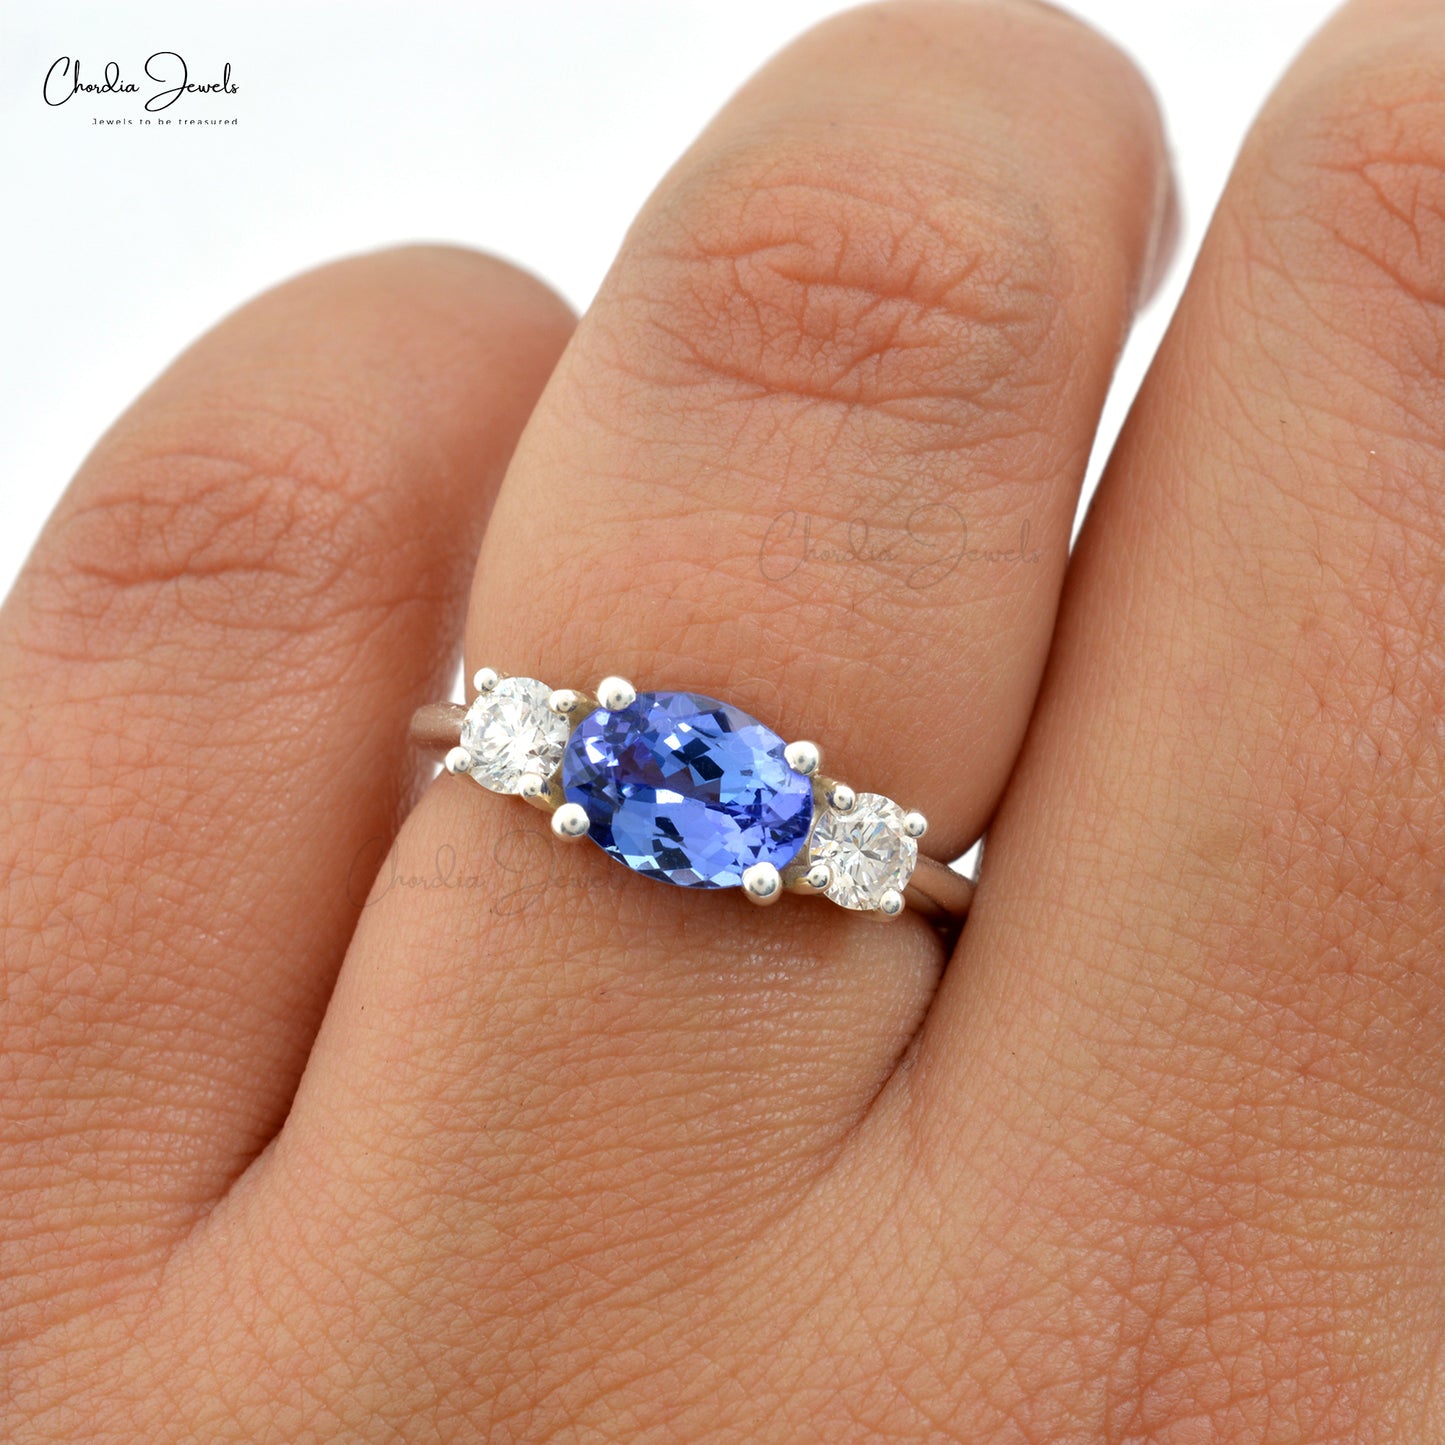 Halo three stone style Engagement Ring 001-140-00388 | Carroll's Jewelers |  Doylestown, PA